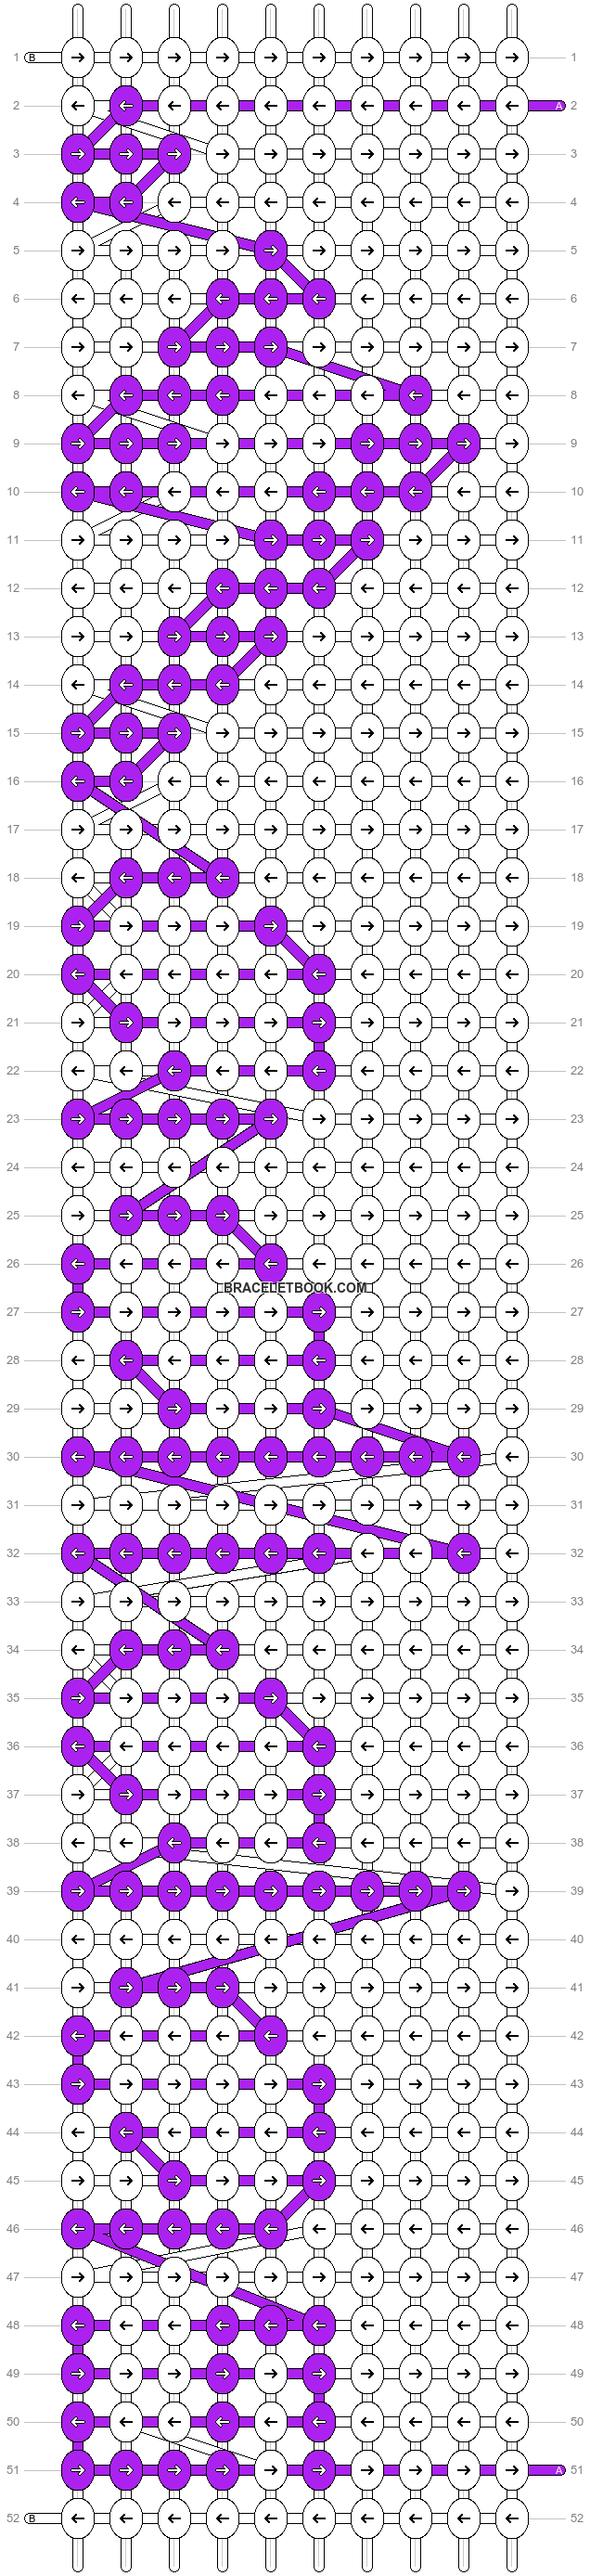 Alpha pattern #57019 variation #99904 pattern